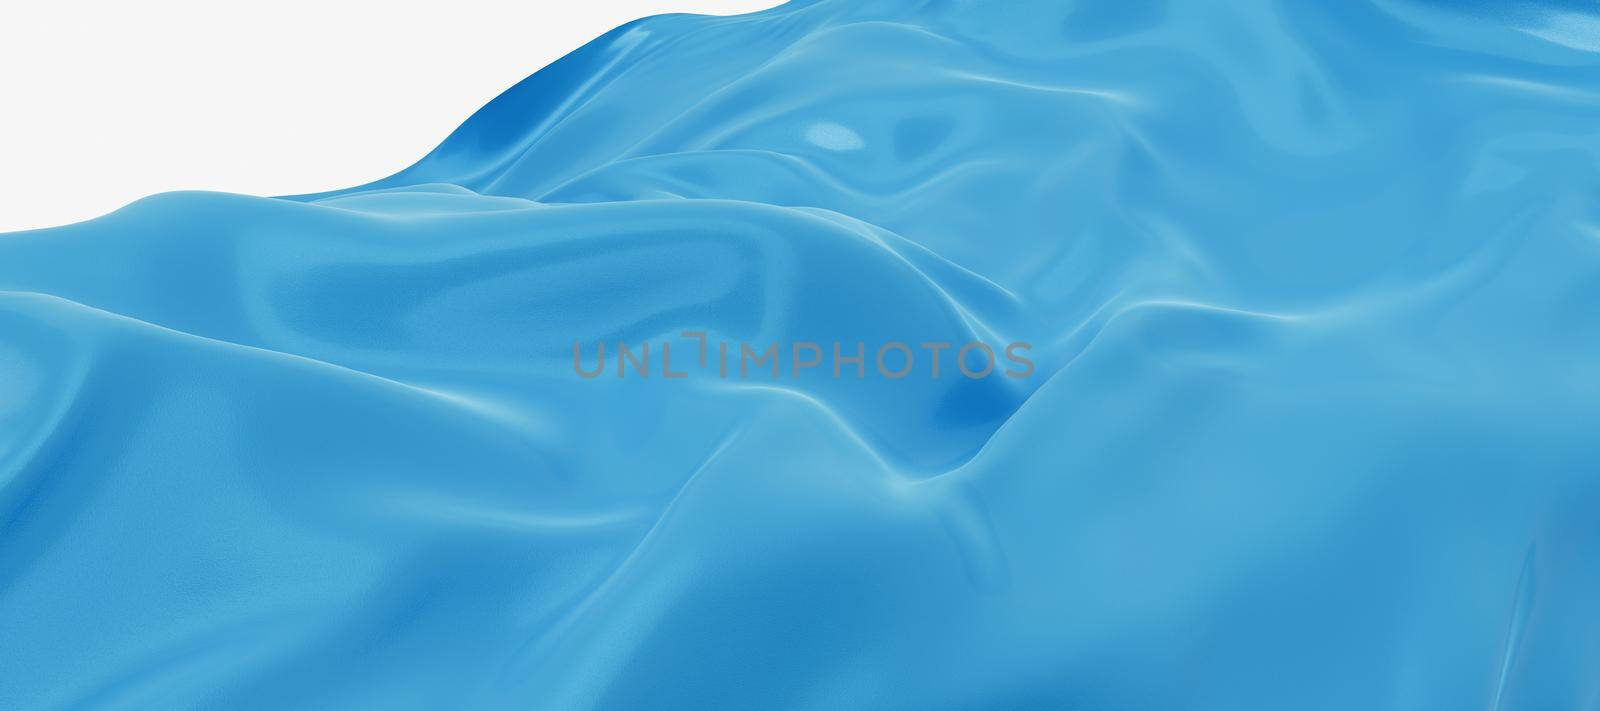 Flowing blue wave cloth, 3d rendering. Computer digital drawing.